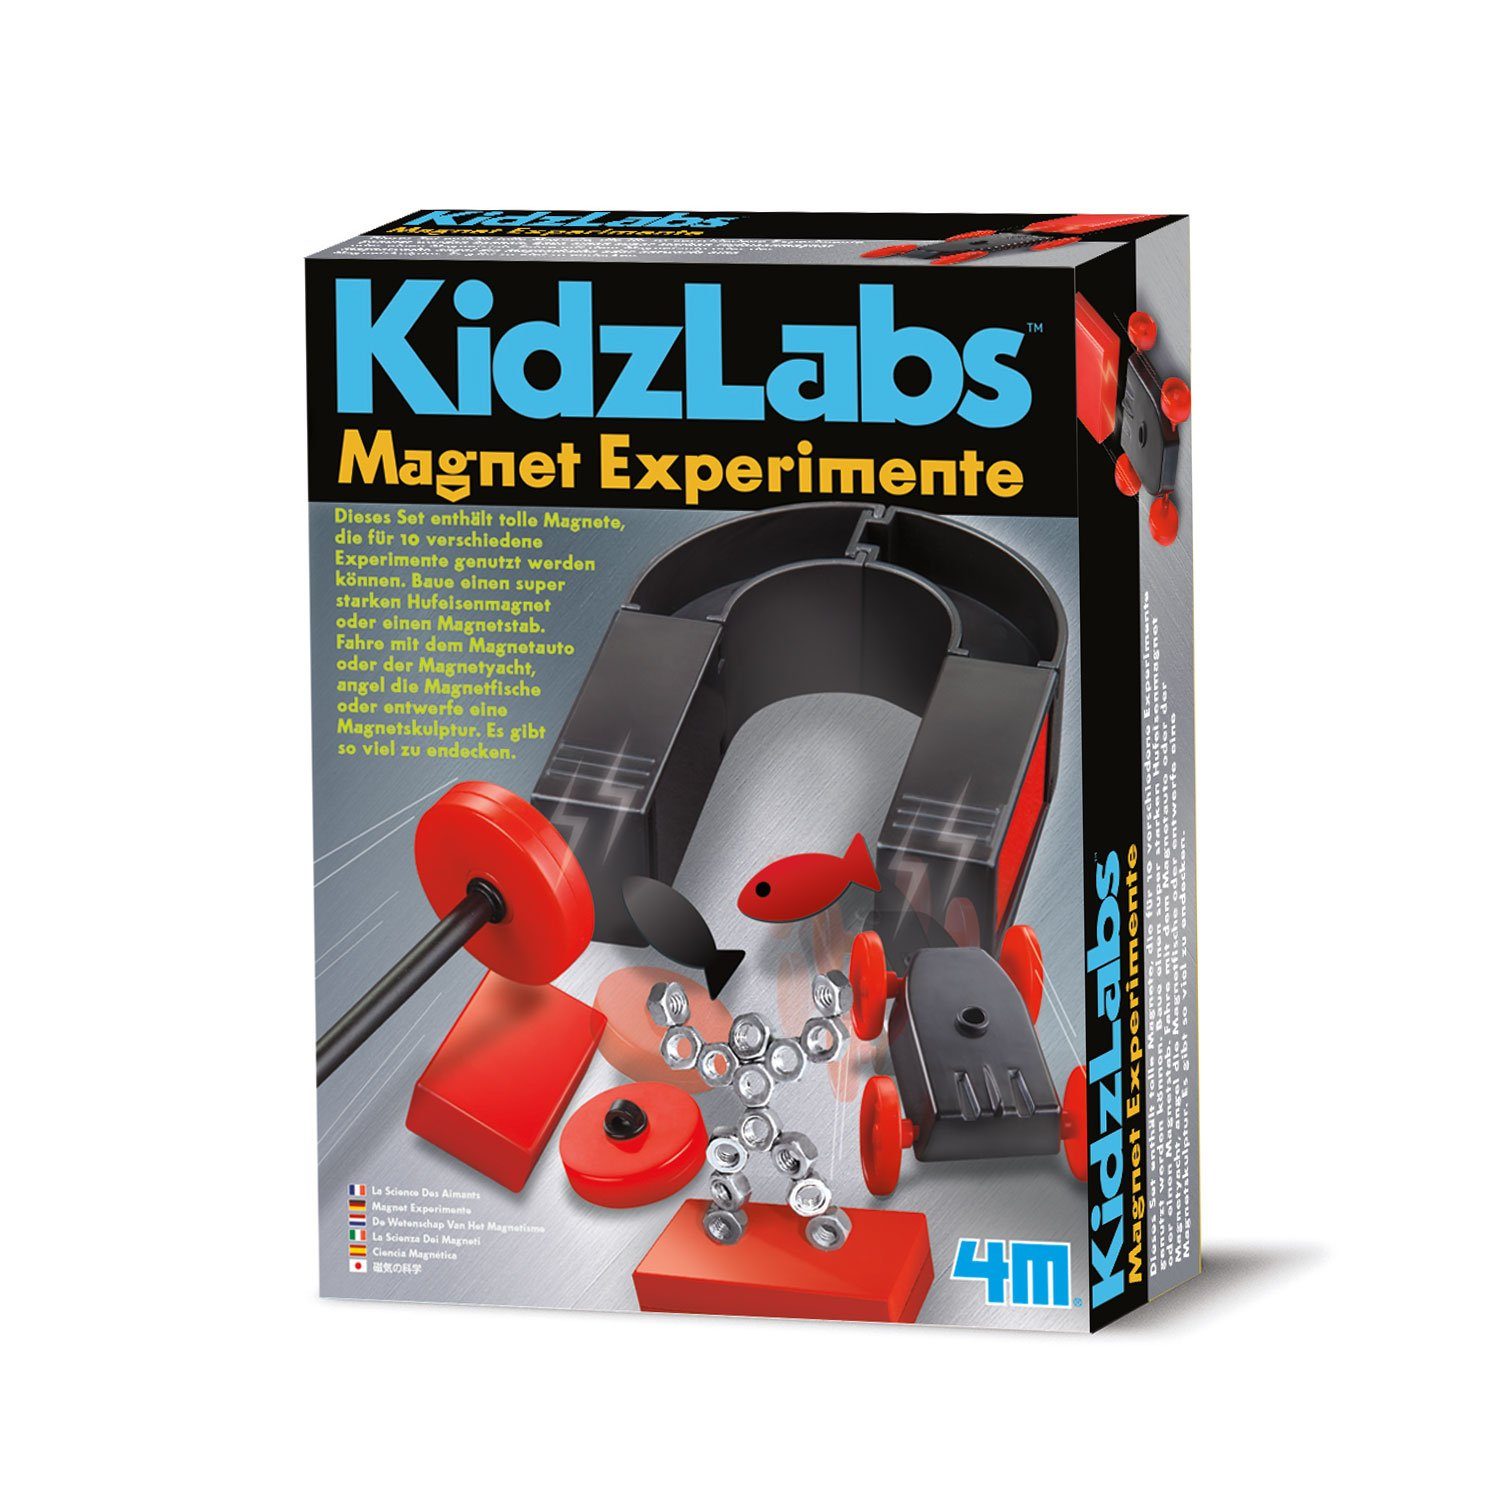 Magnetspiel inkl. KidzLabs Experimente, Puzzleteile 3D-Puzzle Figuren, mit Magnet Anleitung,